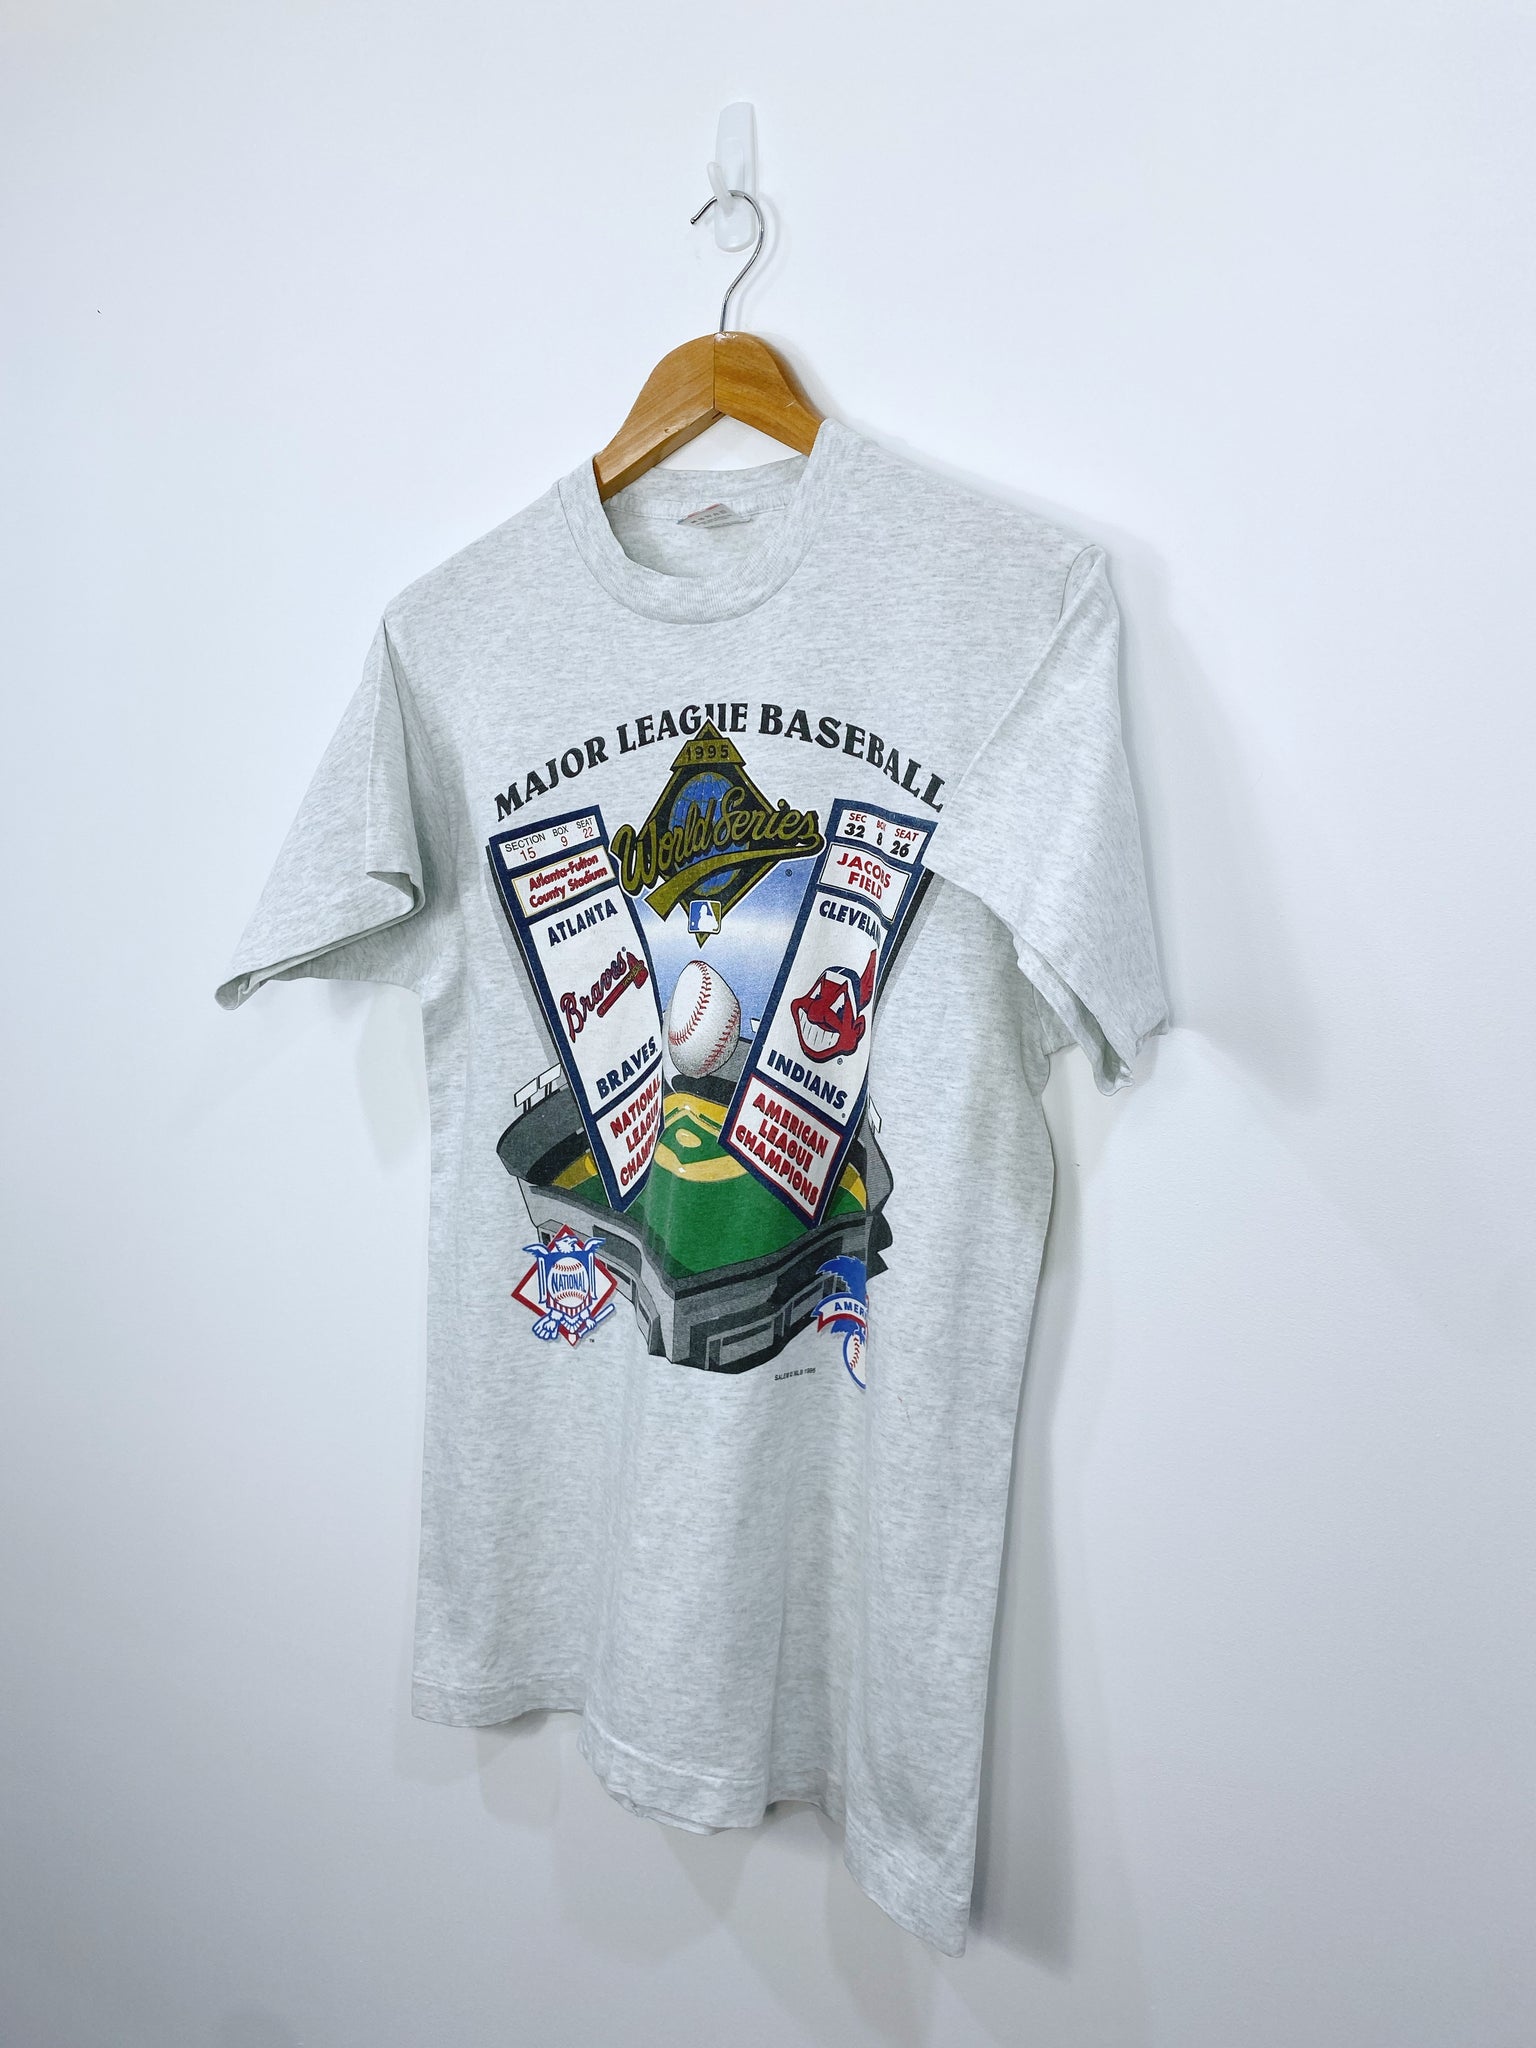 Vintage 1995 Braves Vs Indians T-shirt M